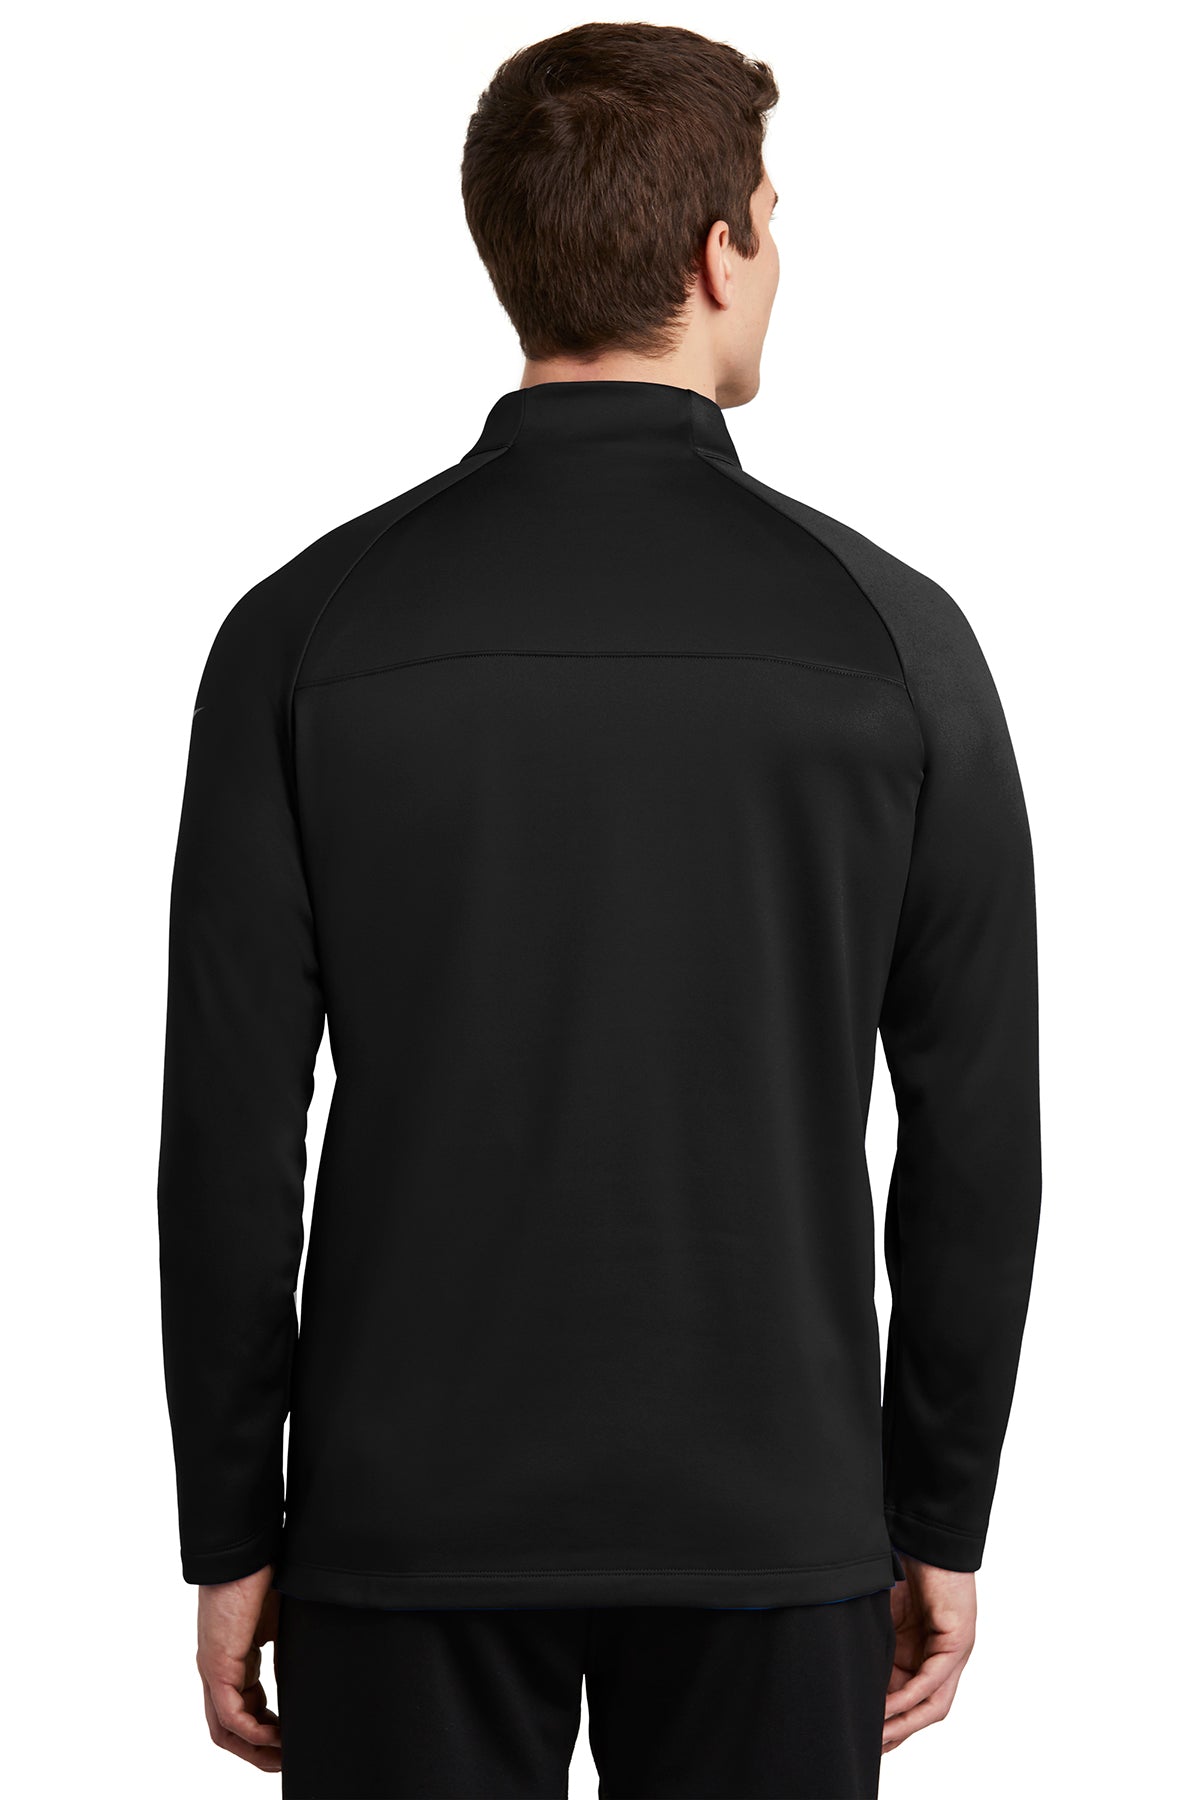 Nike ThermaFIT Custom Fleece Quarter Zips, Black